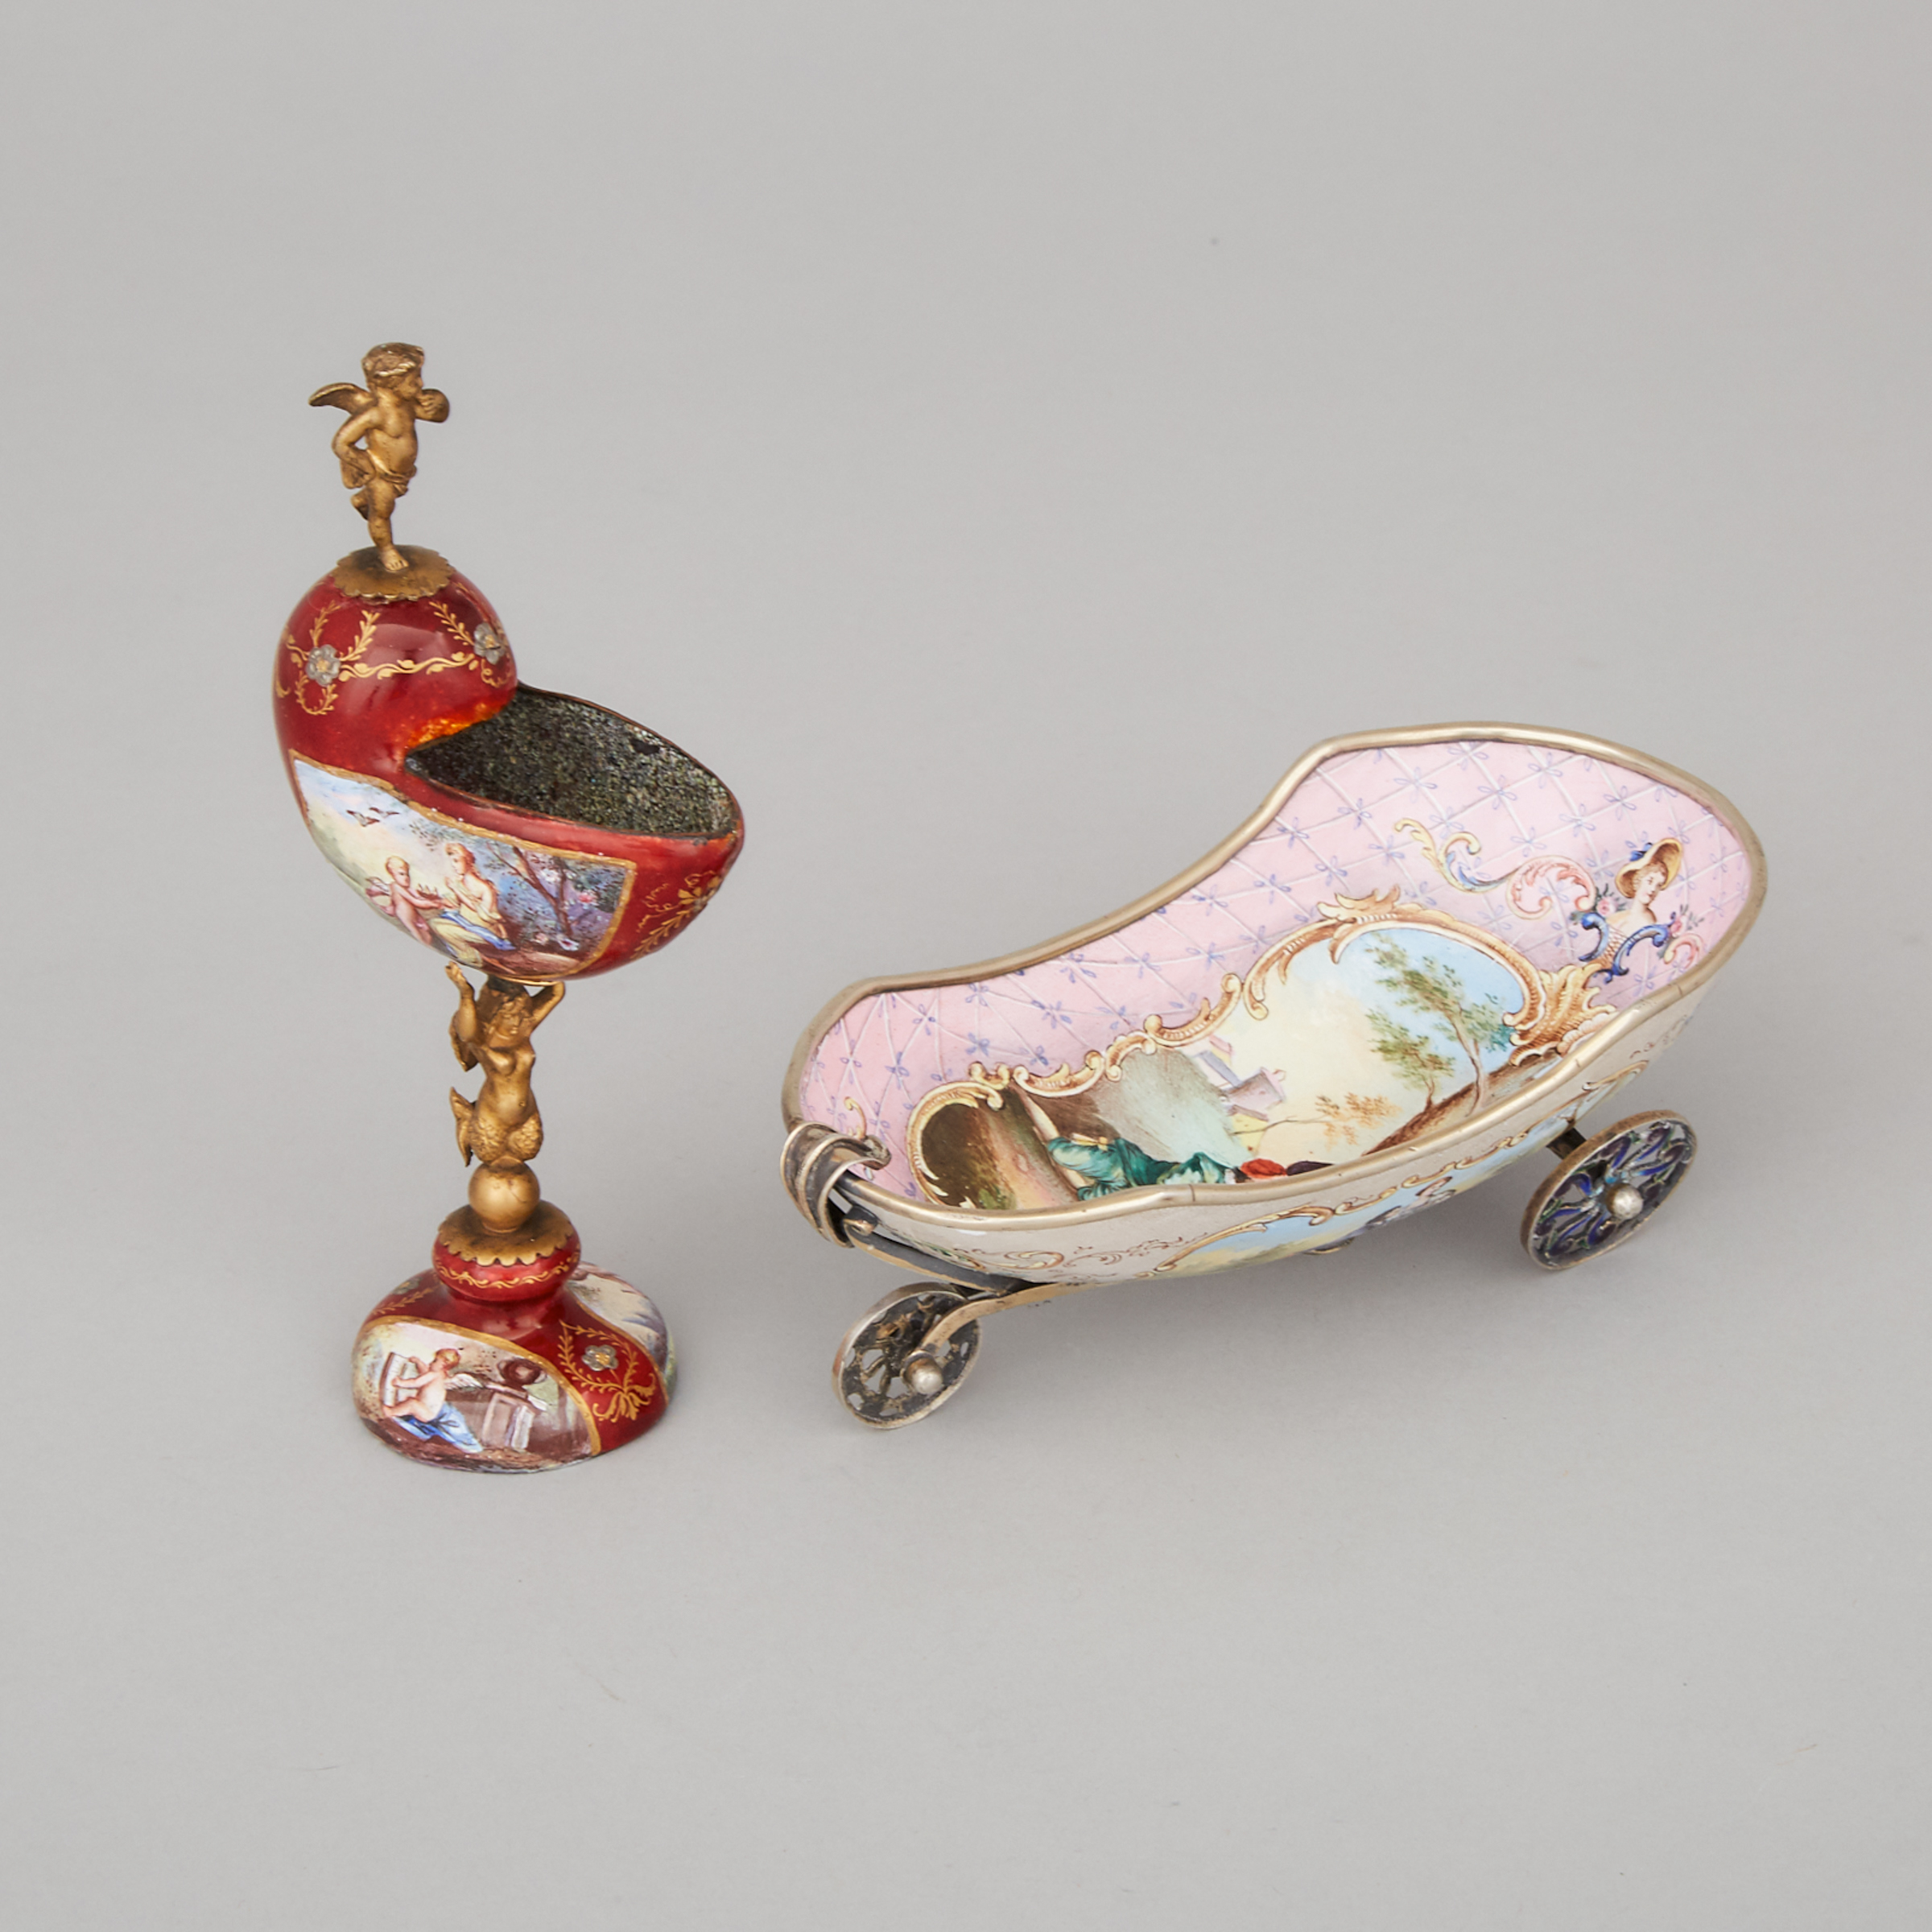 Six Piece Viennese Enamel Mounted Oromolu Miniature Salon Suite, early 19th century